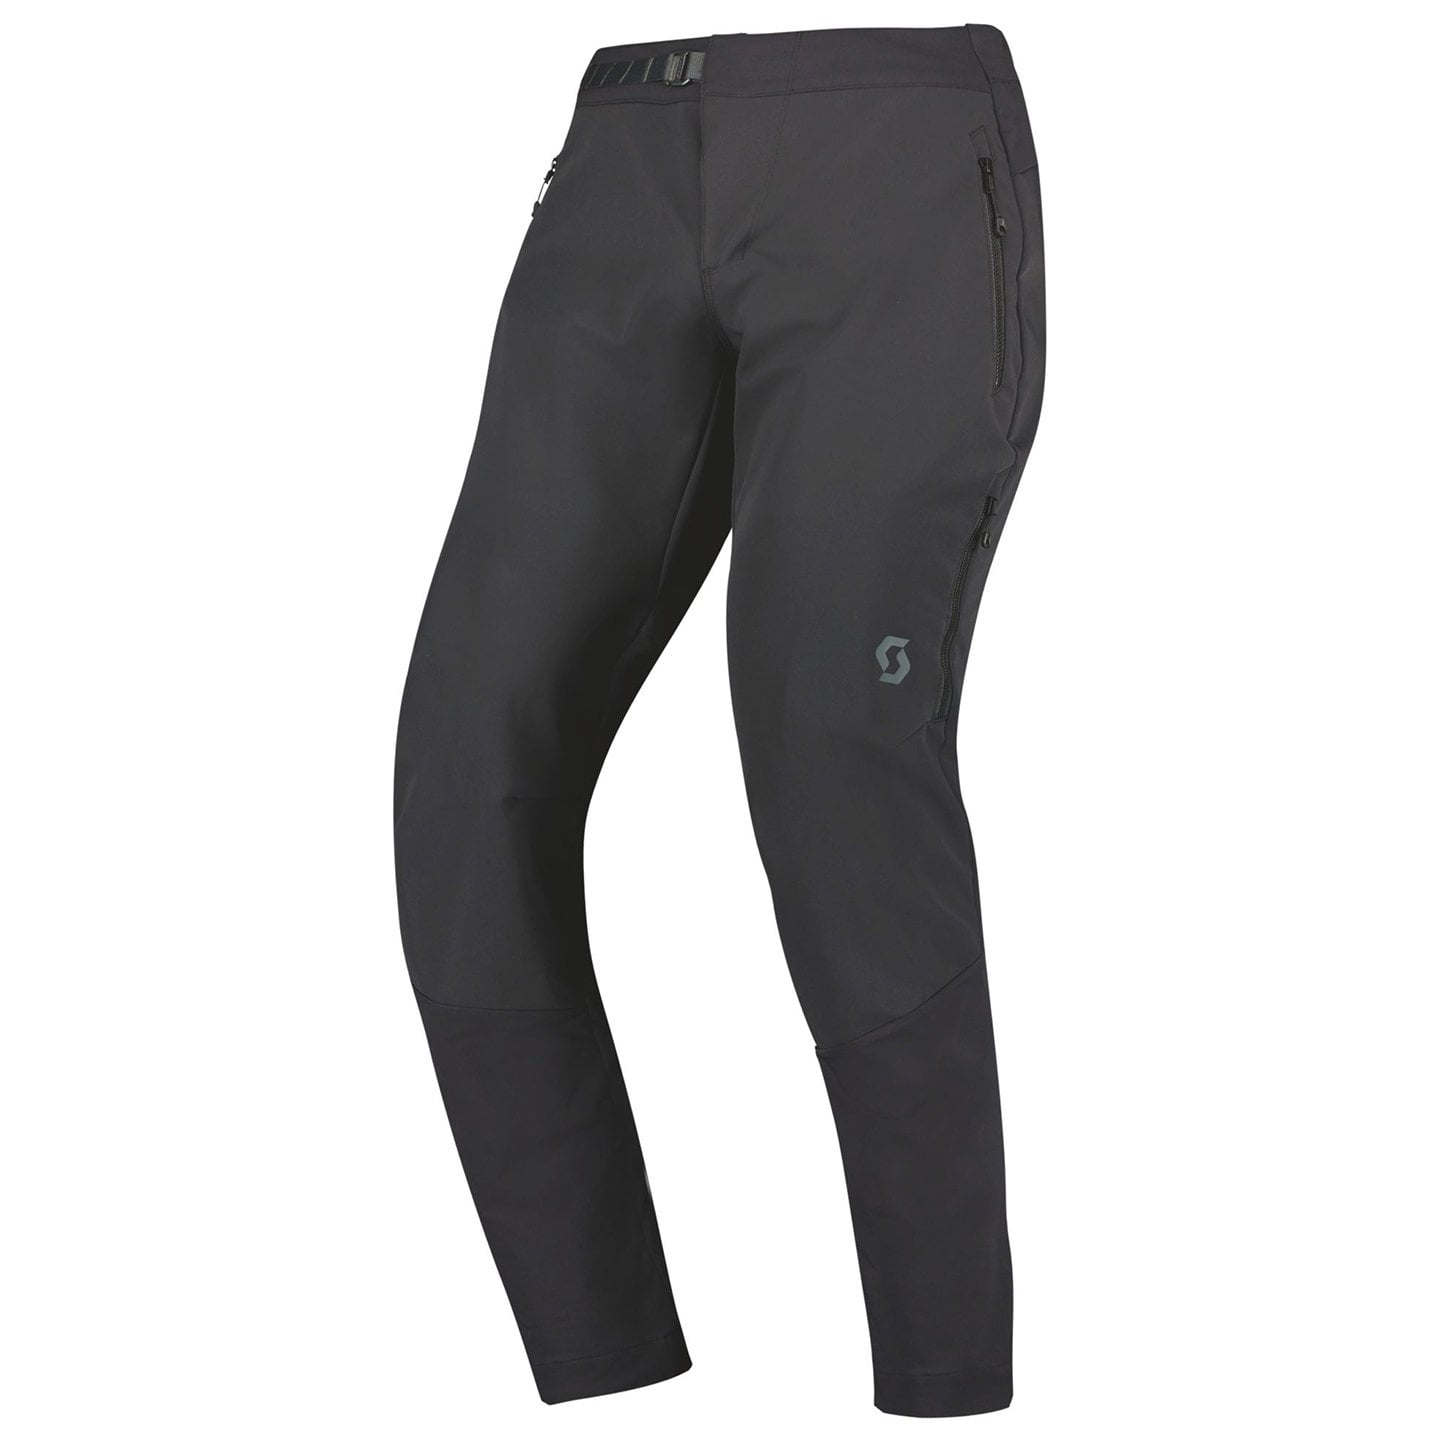 SCOTT Trail Storm Hybrid Bike Trousers w/o Pad Long Bike Pants, for men, size S, Cycle trousers, Cycle clothing